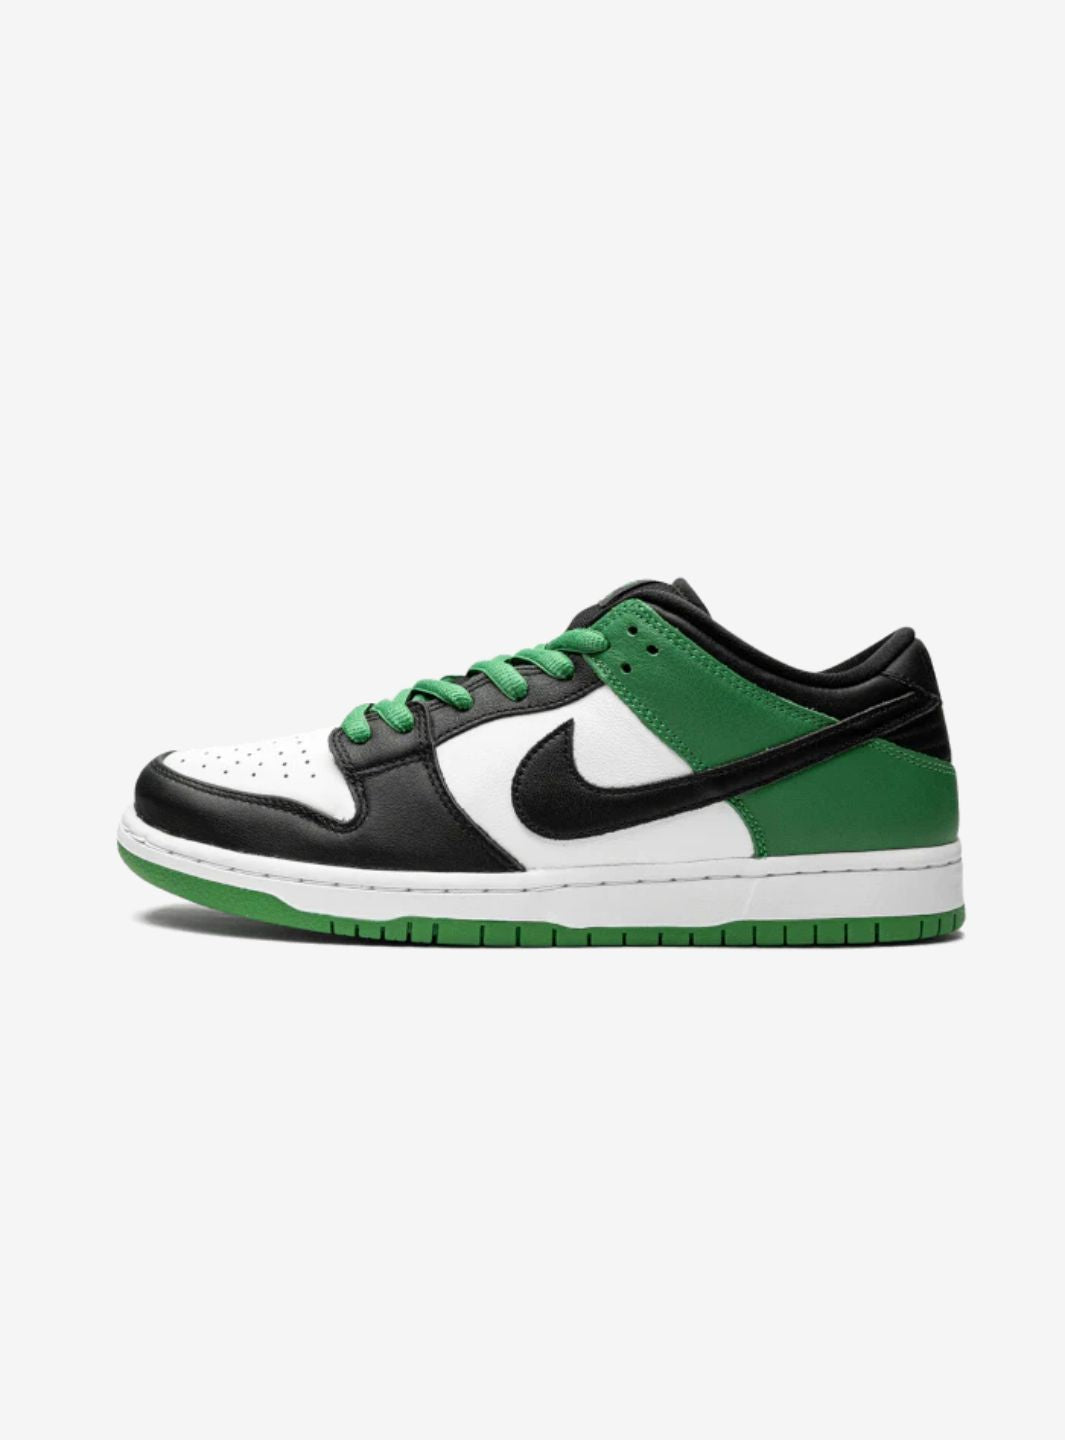 Nike SB Dunk Low Classic Green - BQ6817-302 | ResellZone